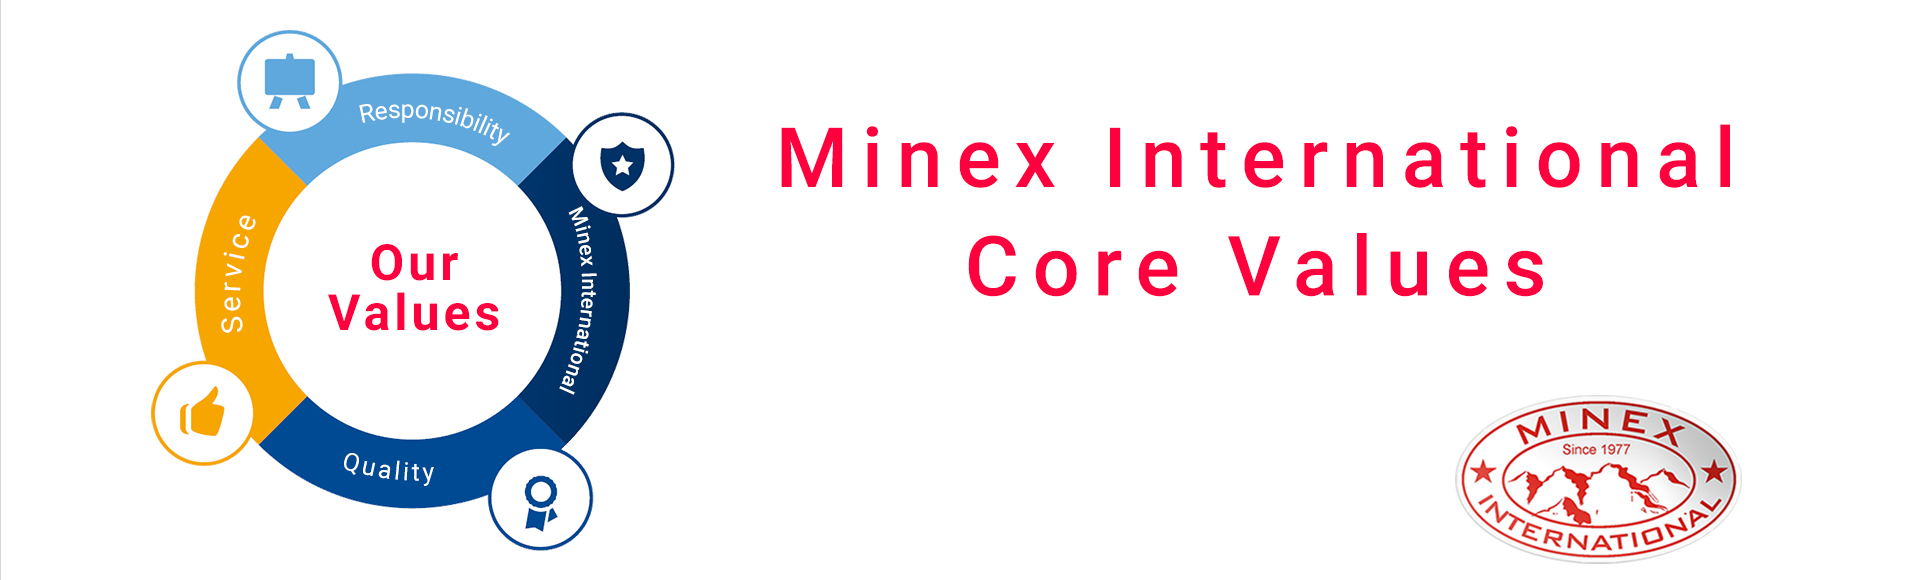 MINEX INTERNATIONAL CORE VALUES